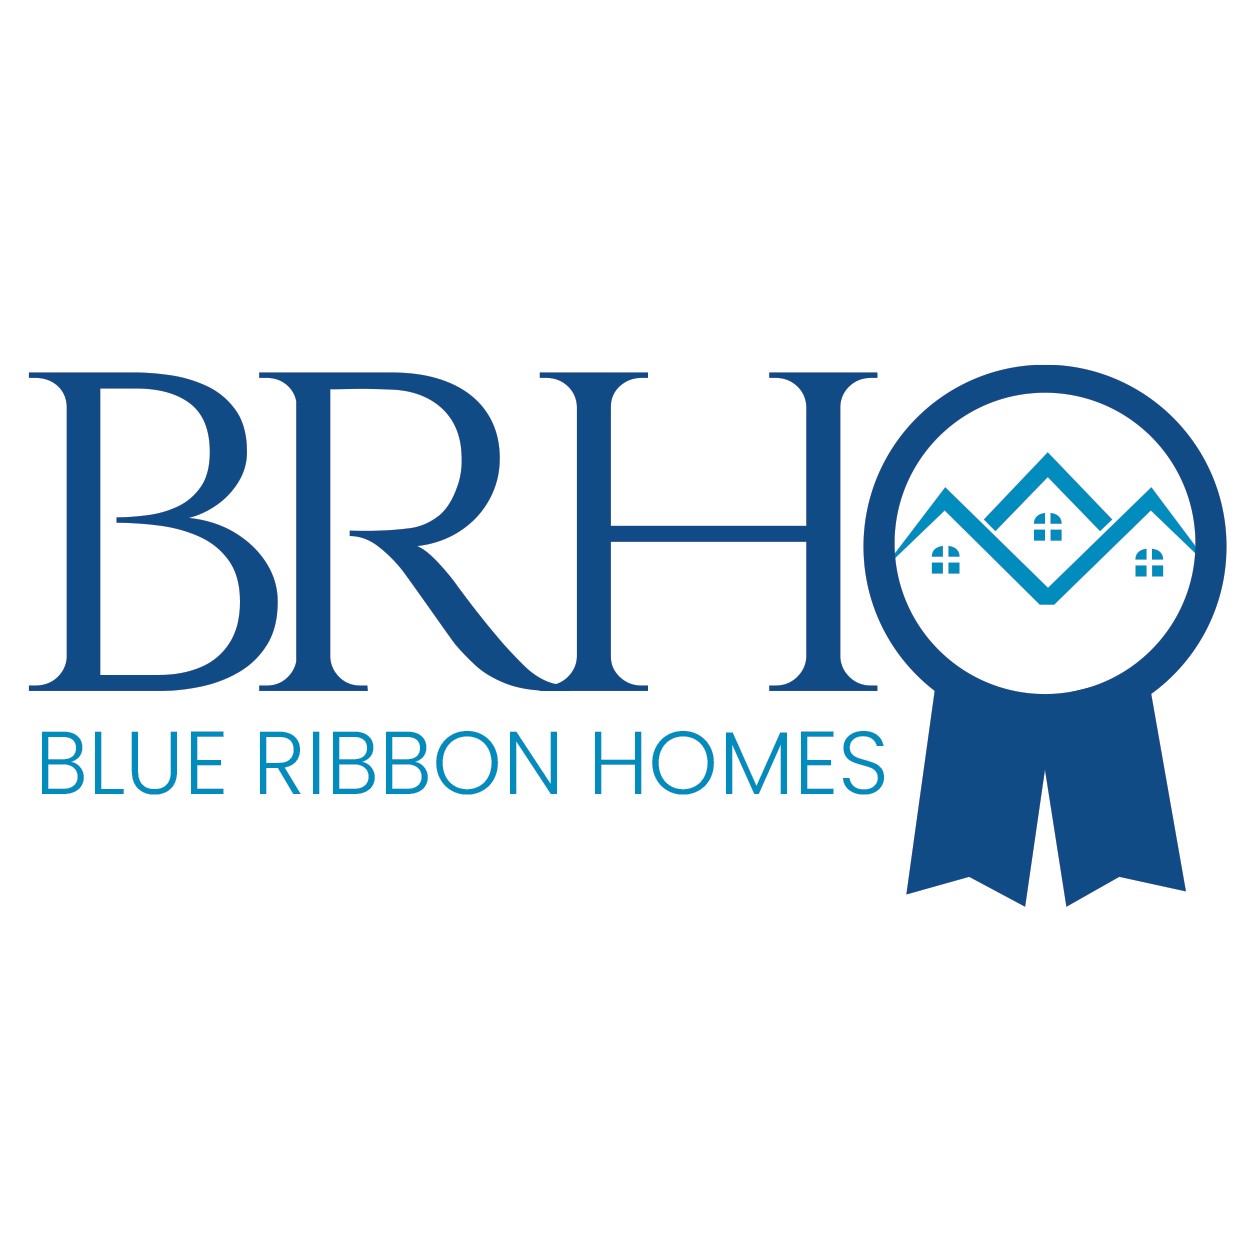 BLUE RIBBON HOMES